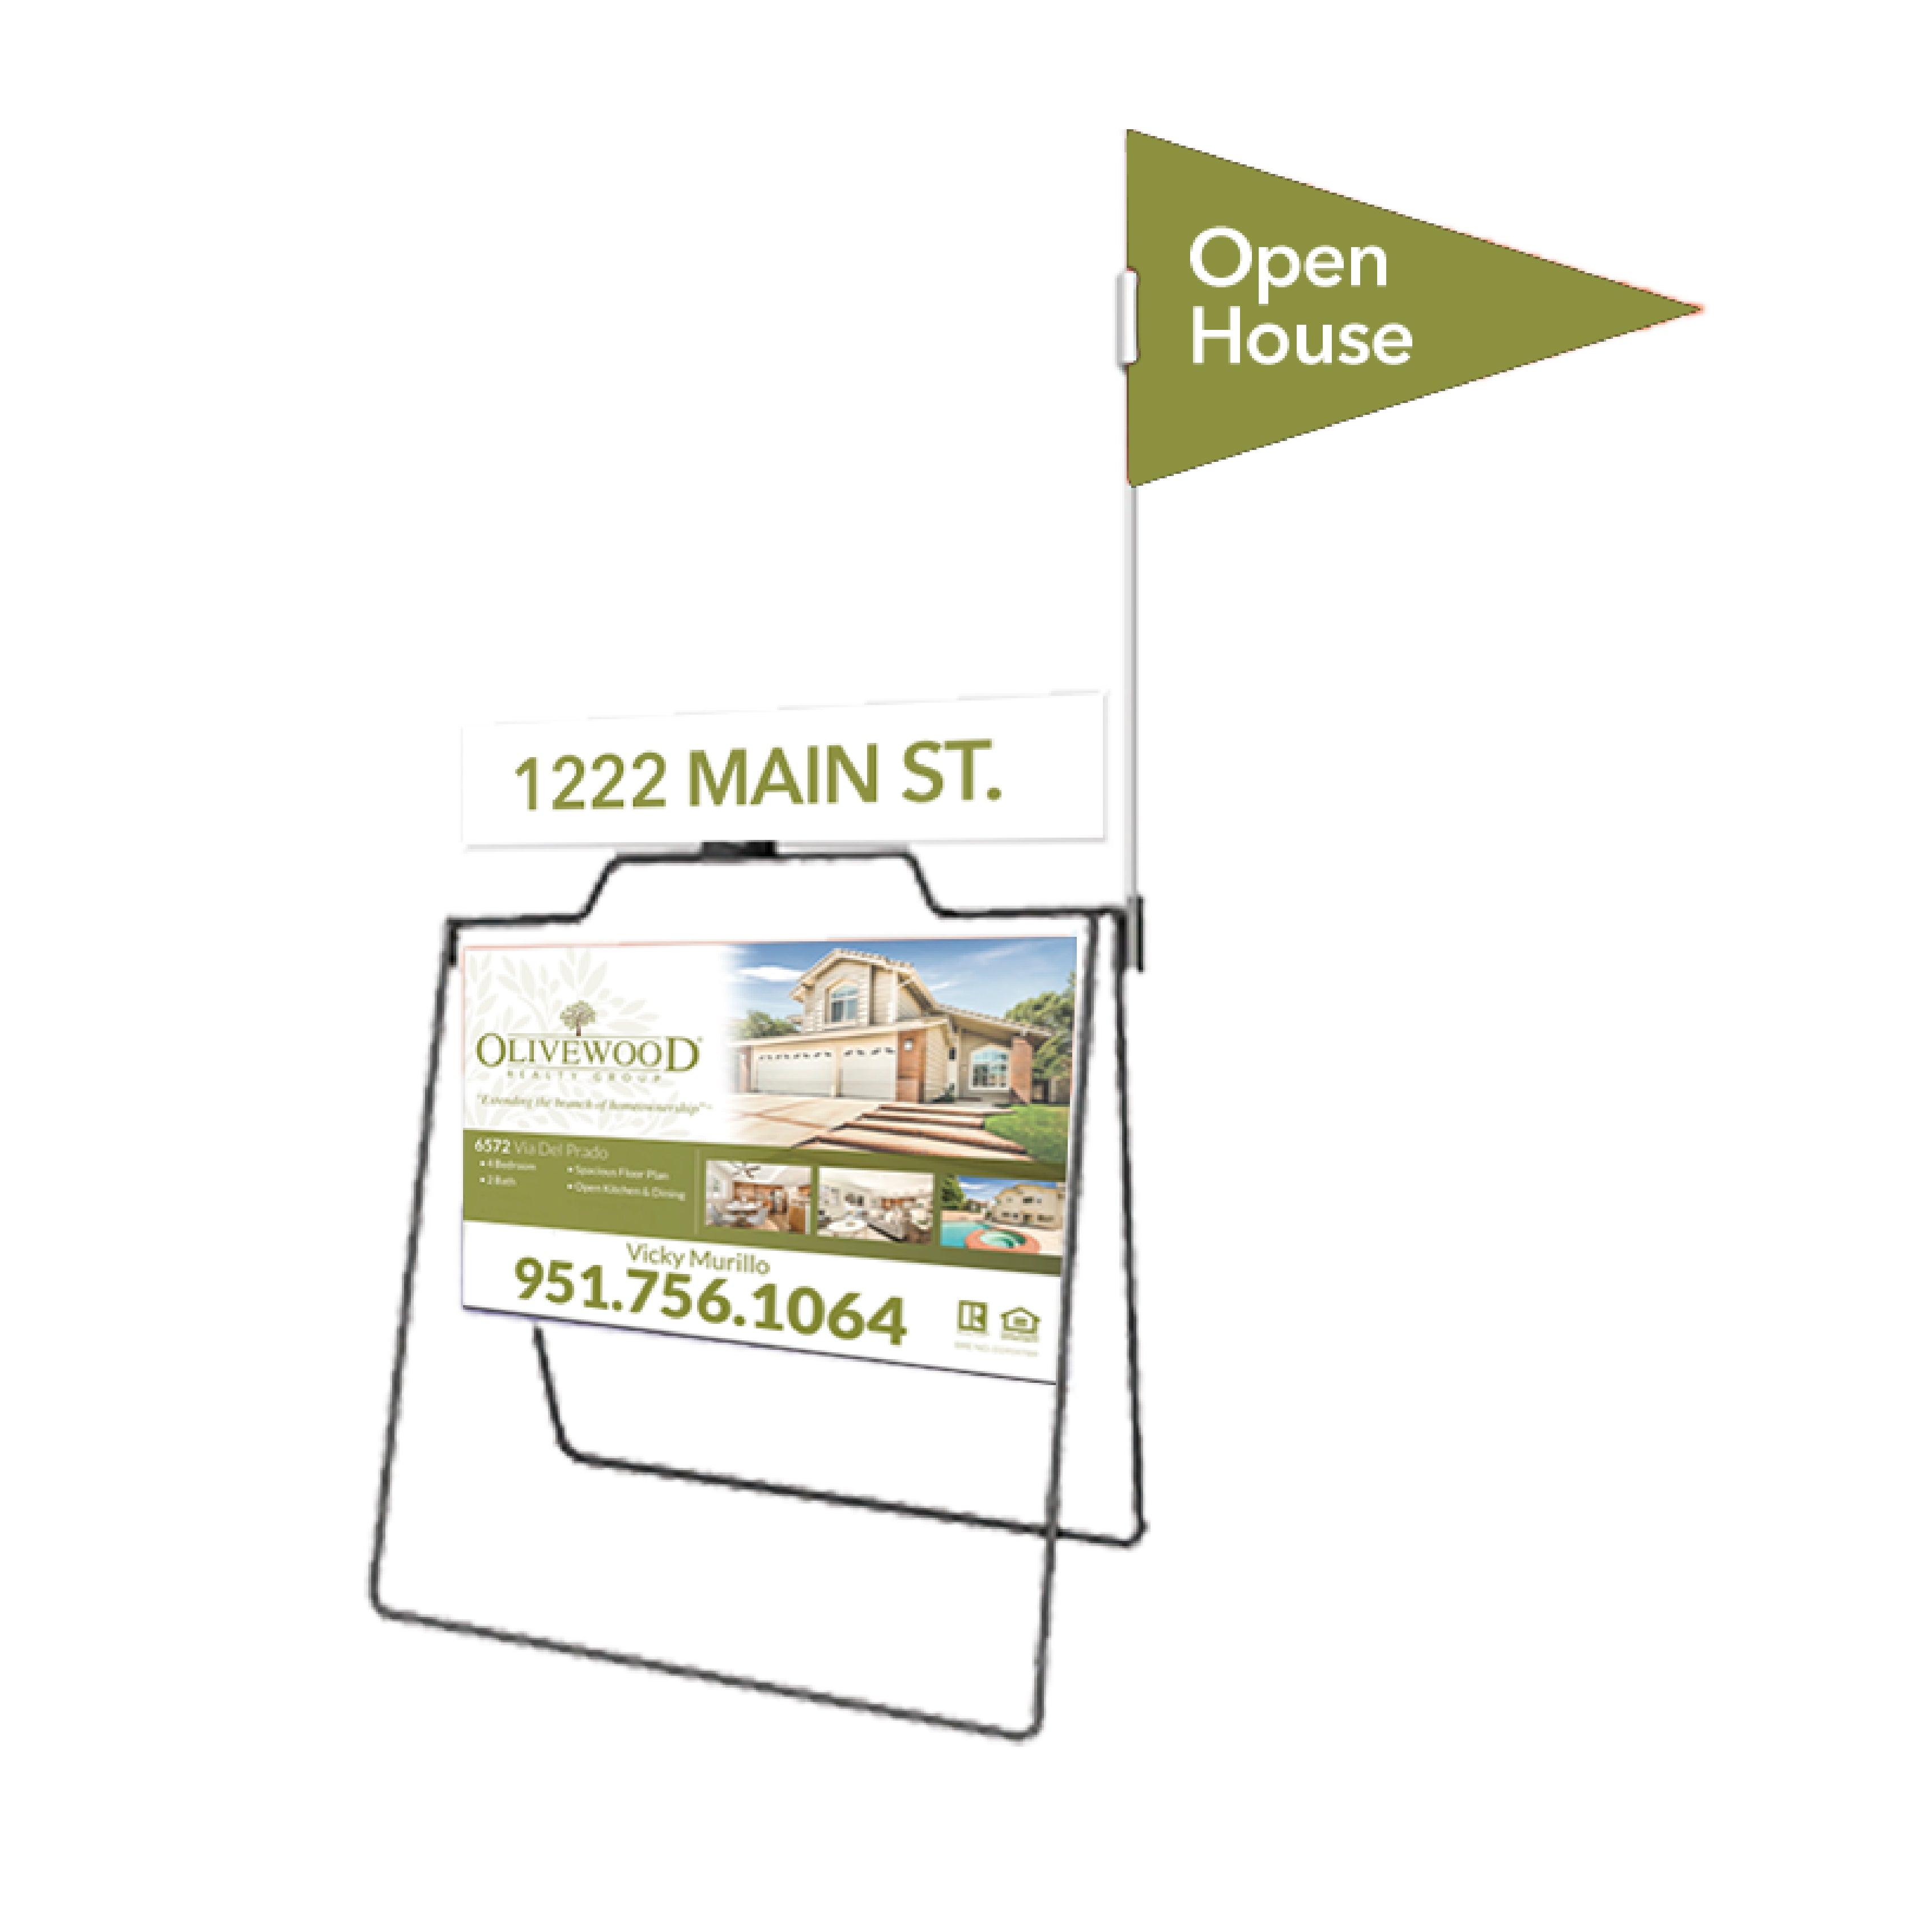 Open House Real Estate A-Frame